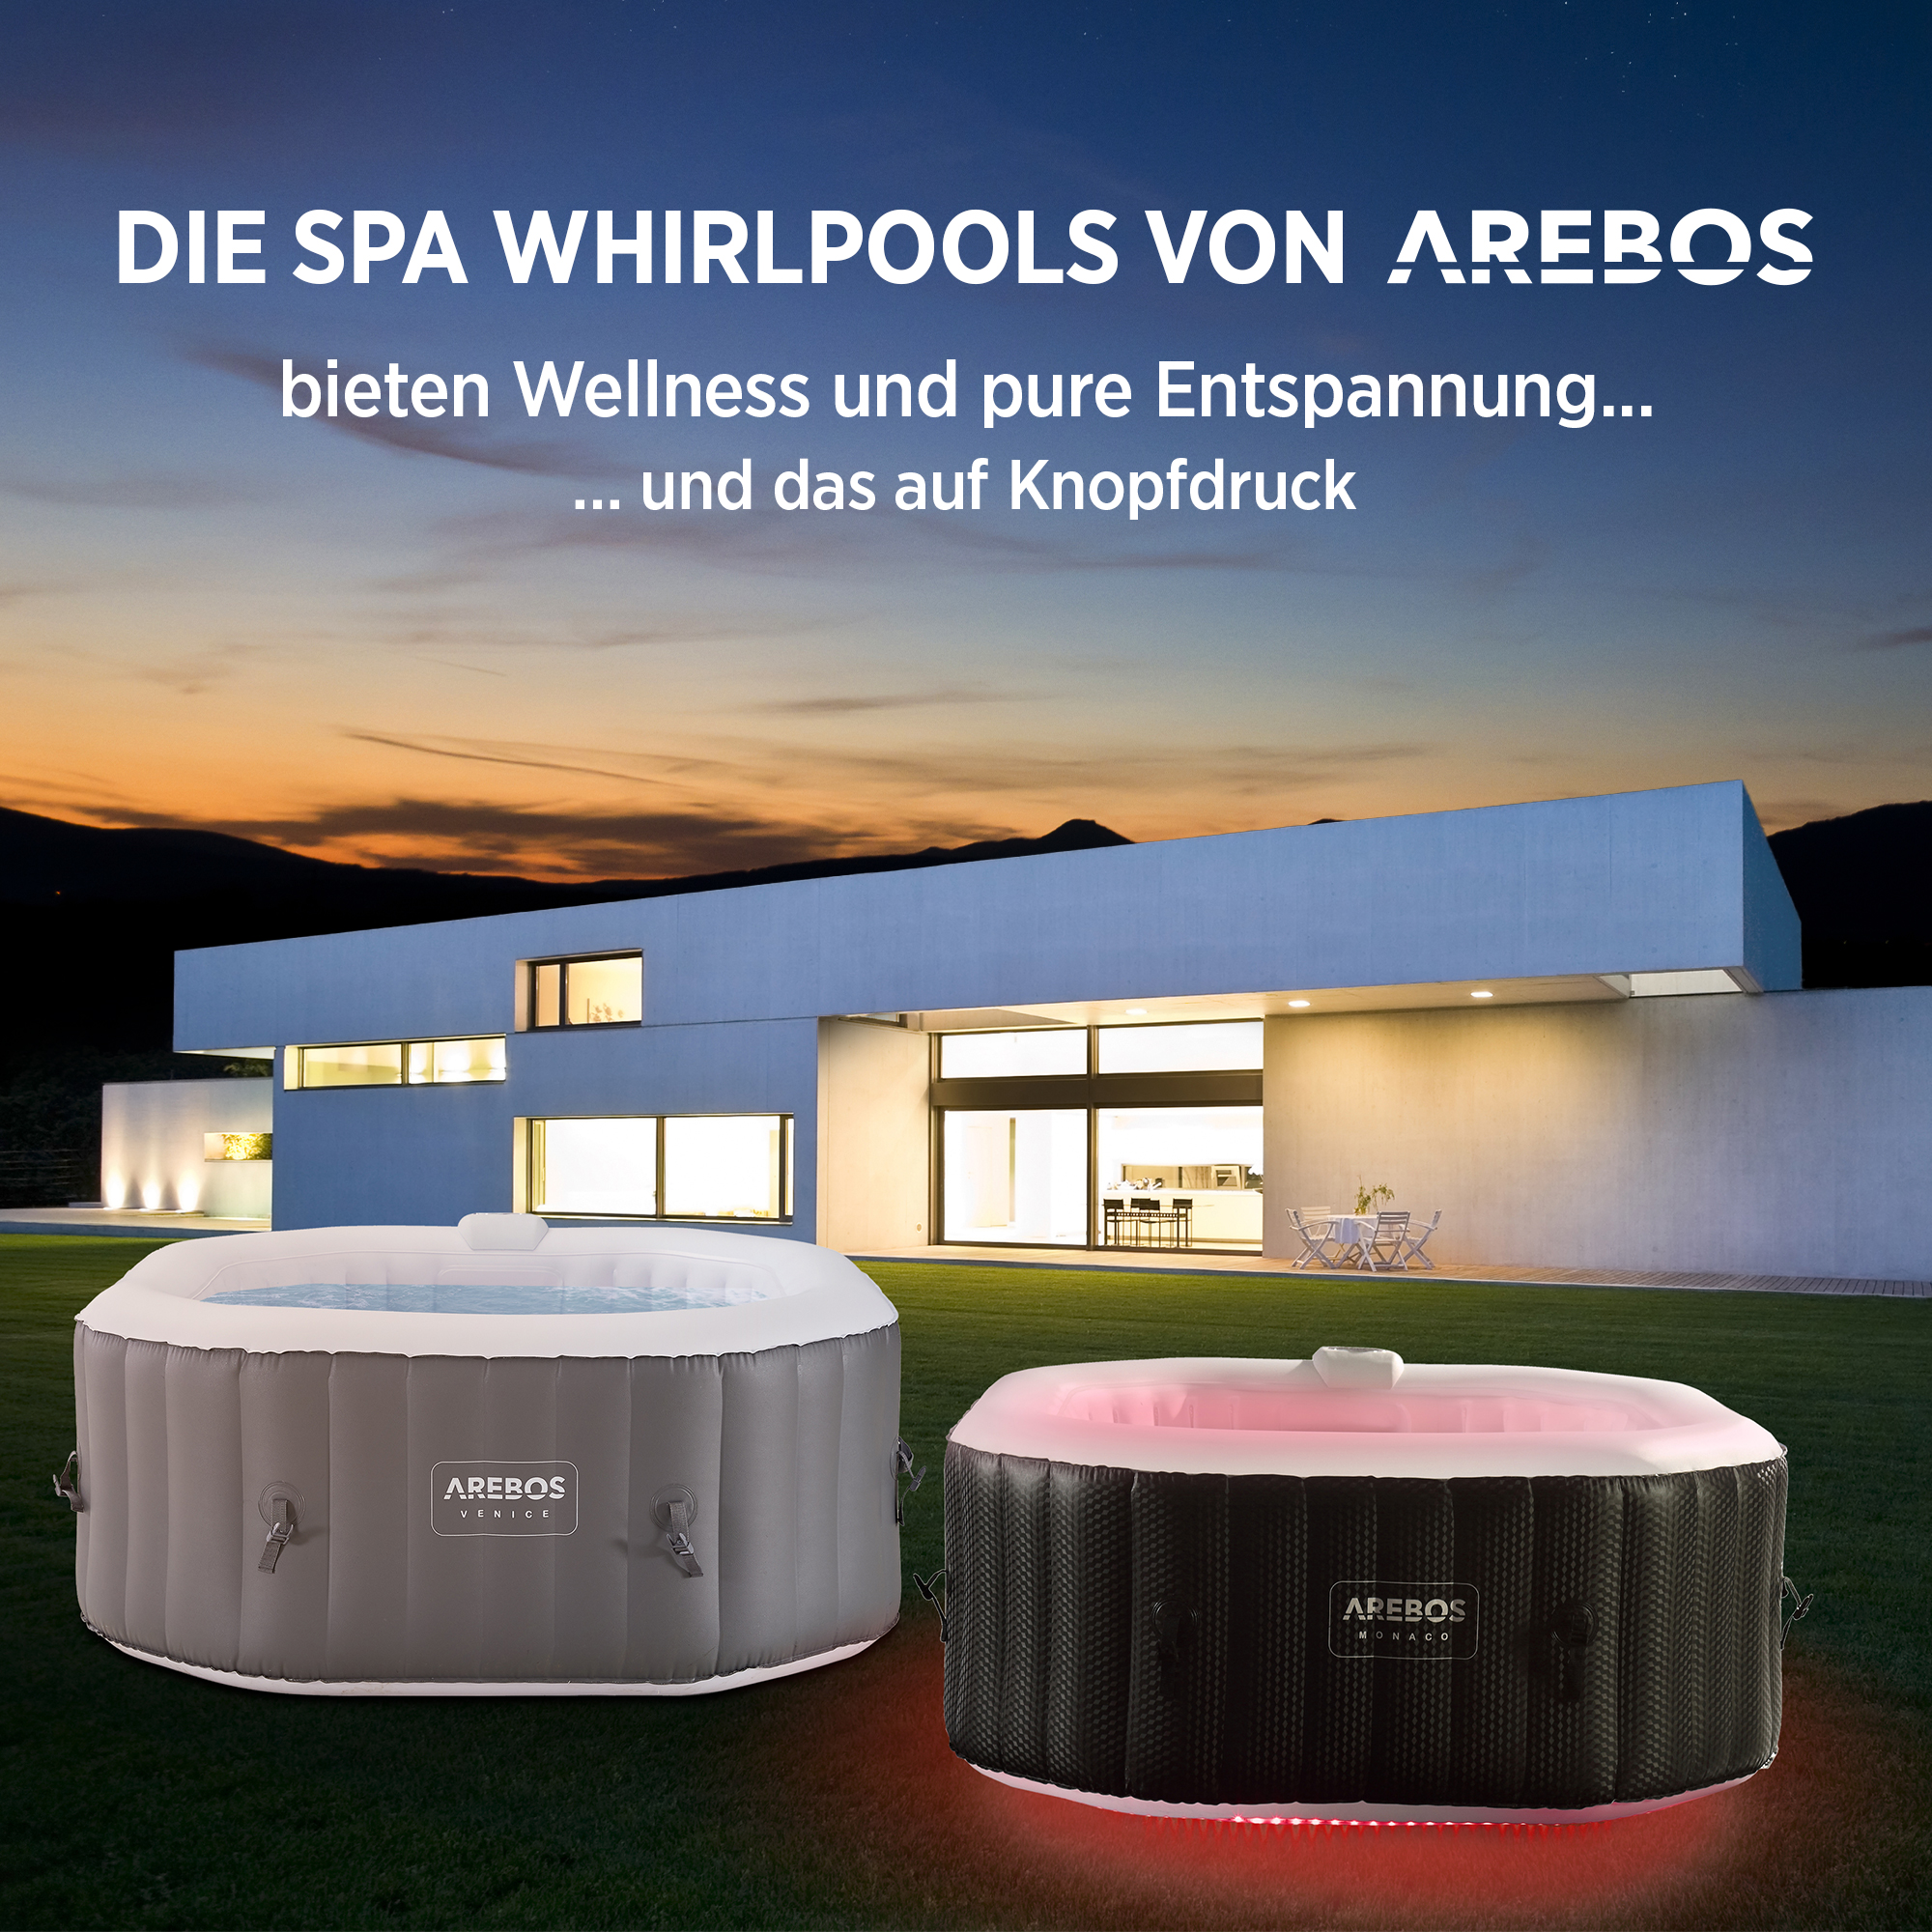 Massage LED 2400W Anthrazit Whirlpool oktogonal 154x154 Pool AREBOS Personen 4 für ca. mit cm, In-Outdoor aufblasbar Spa